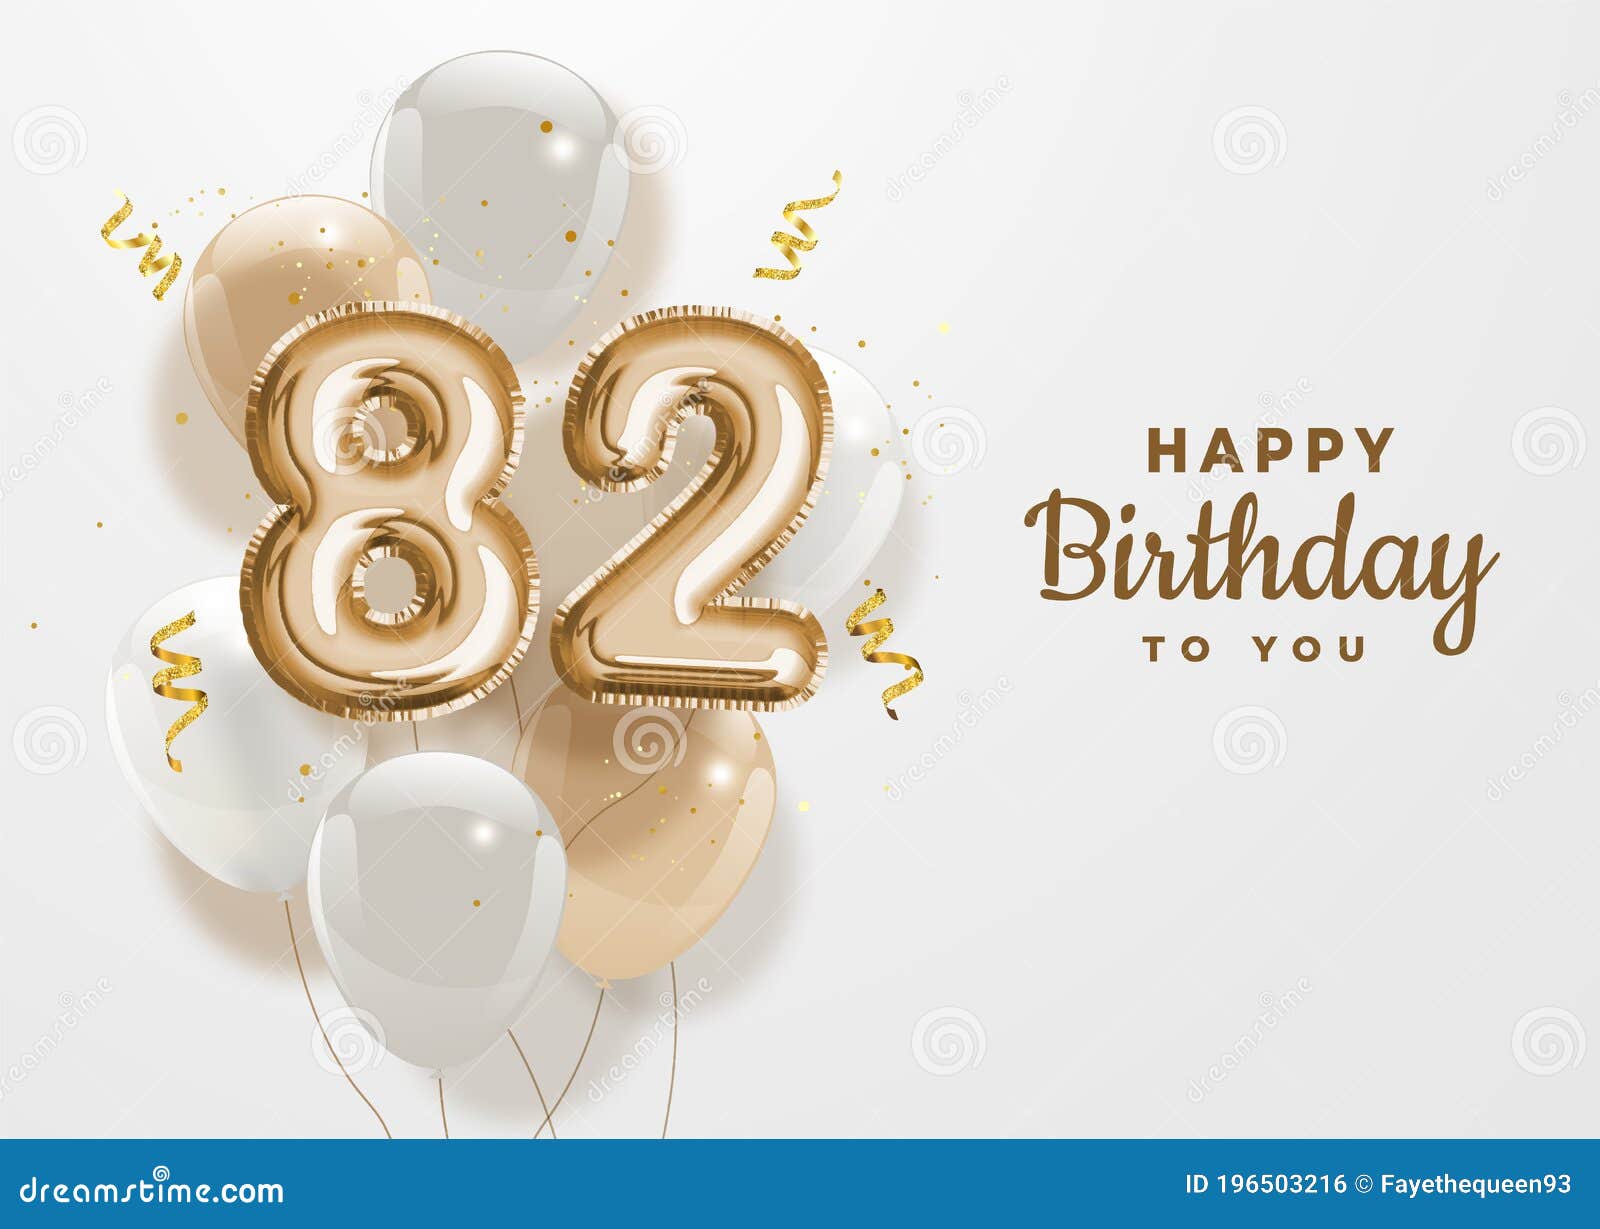 Happy 82nd Birthday Animated GIFs - Download on Funimada.com